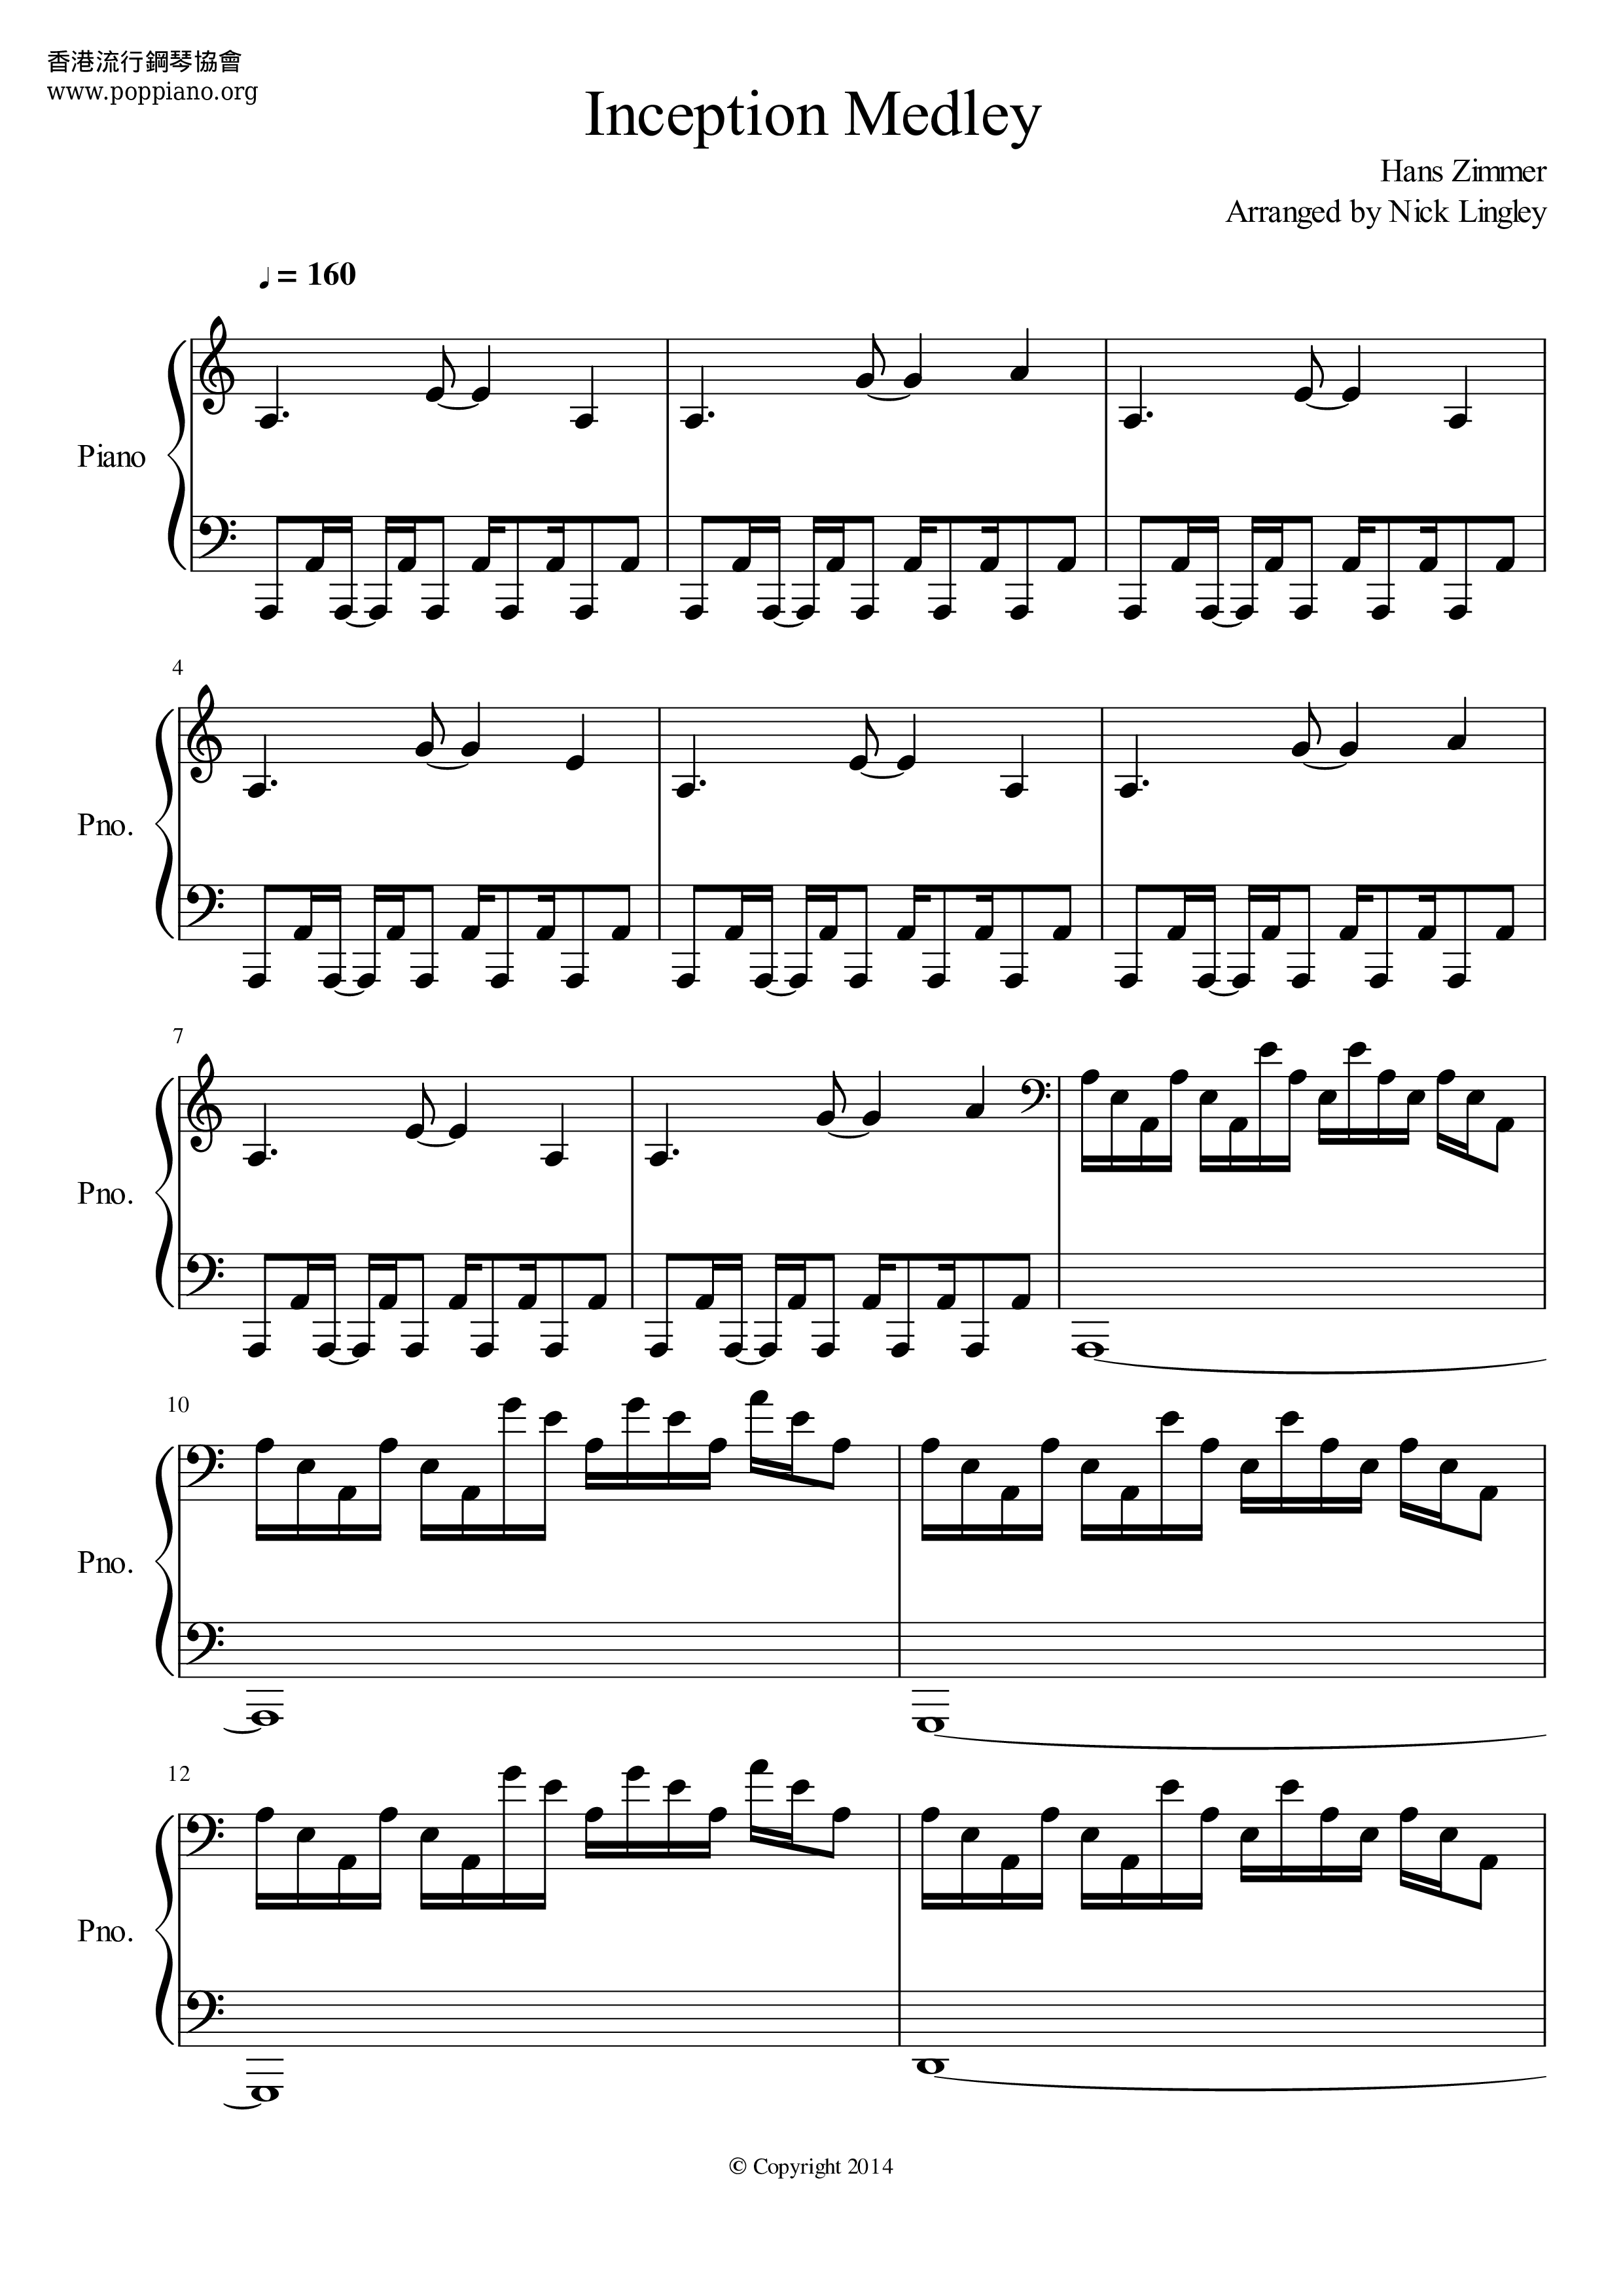 Inception Medley Score